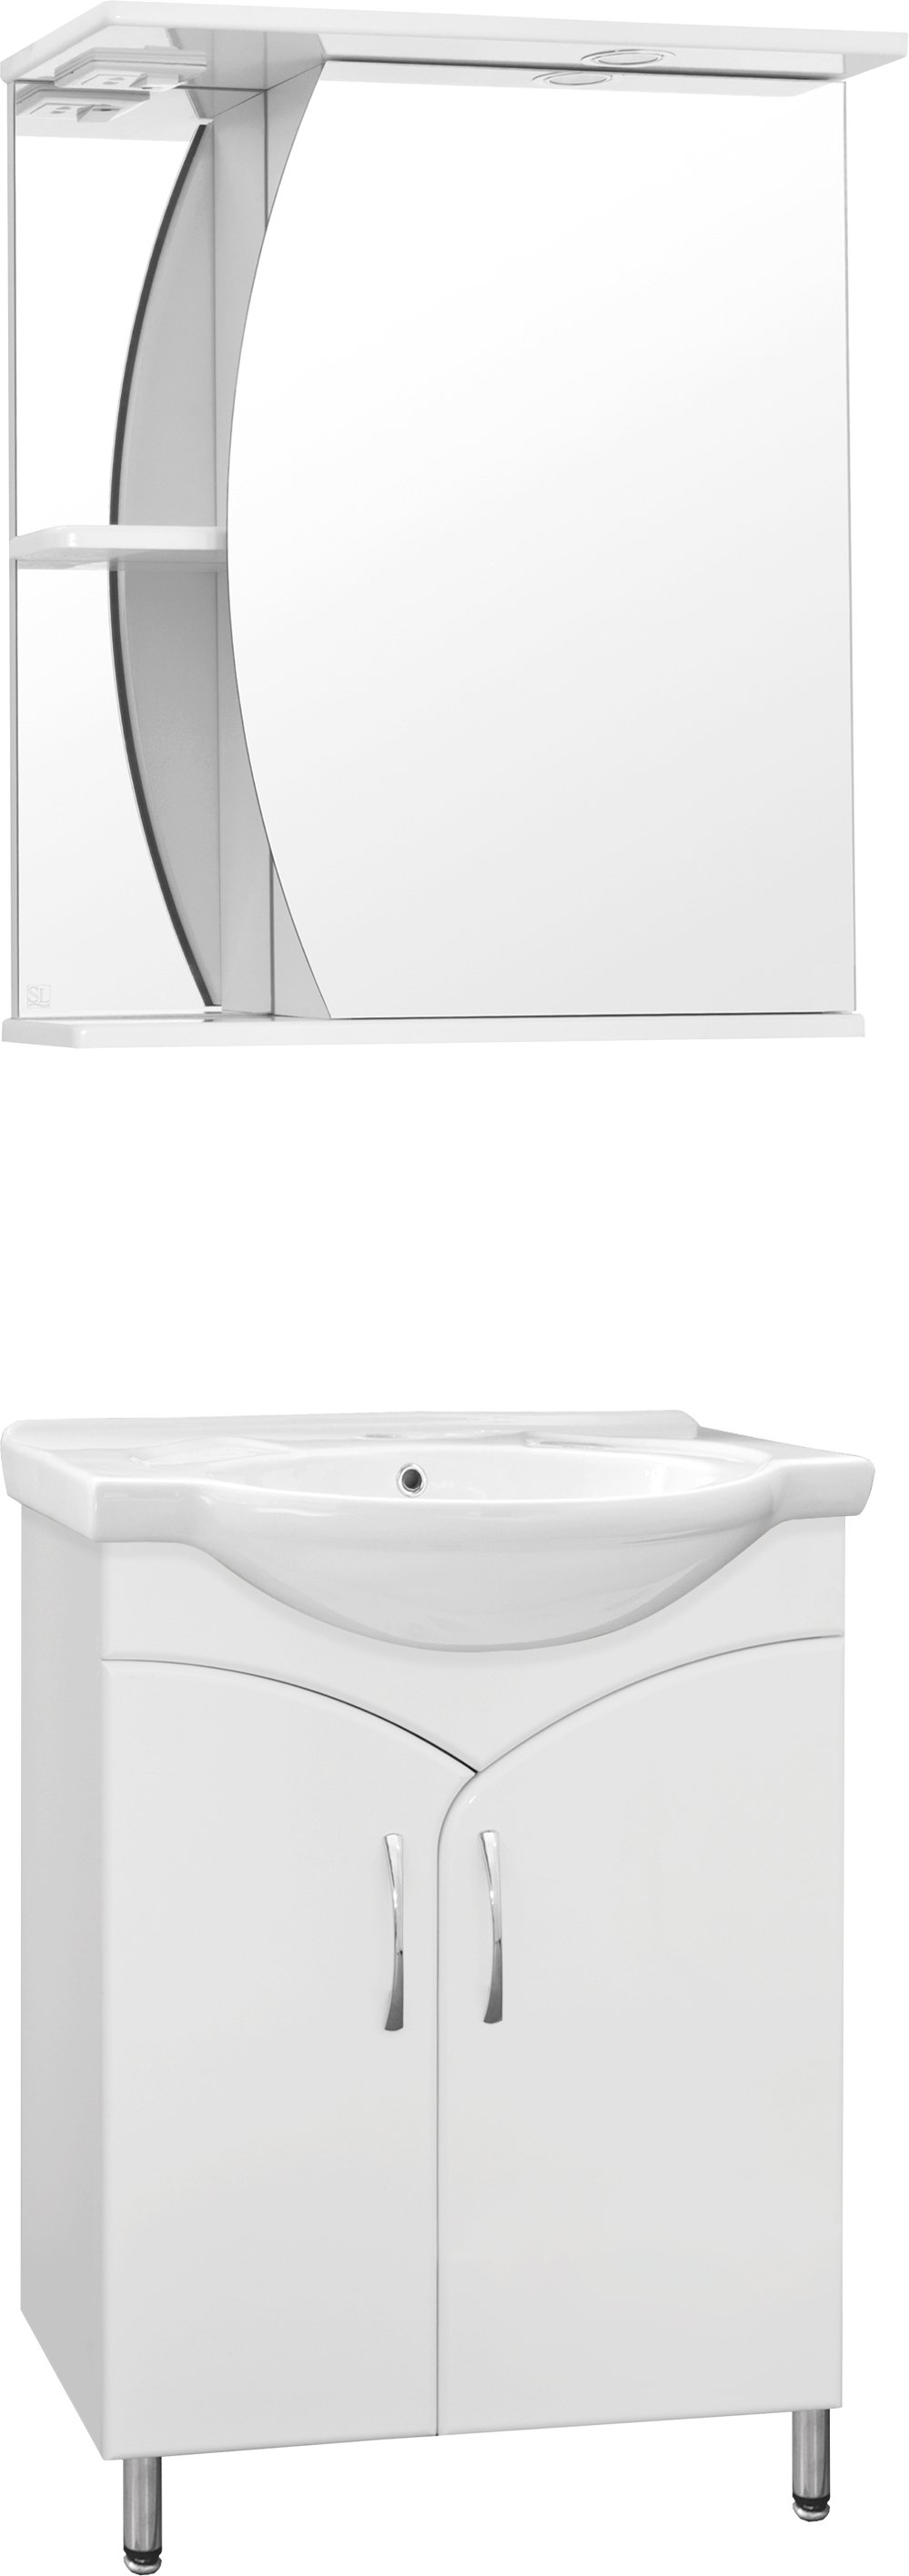 Мебель для ванной Style Line Эко Стандарт №15 60 белая - 0